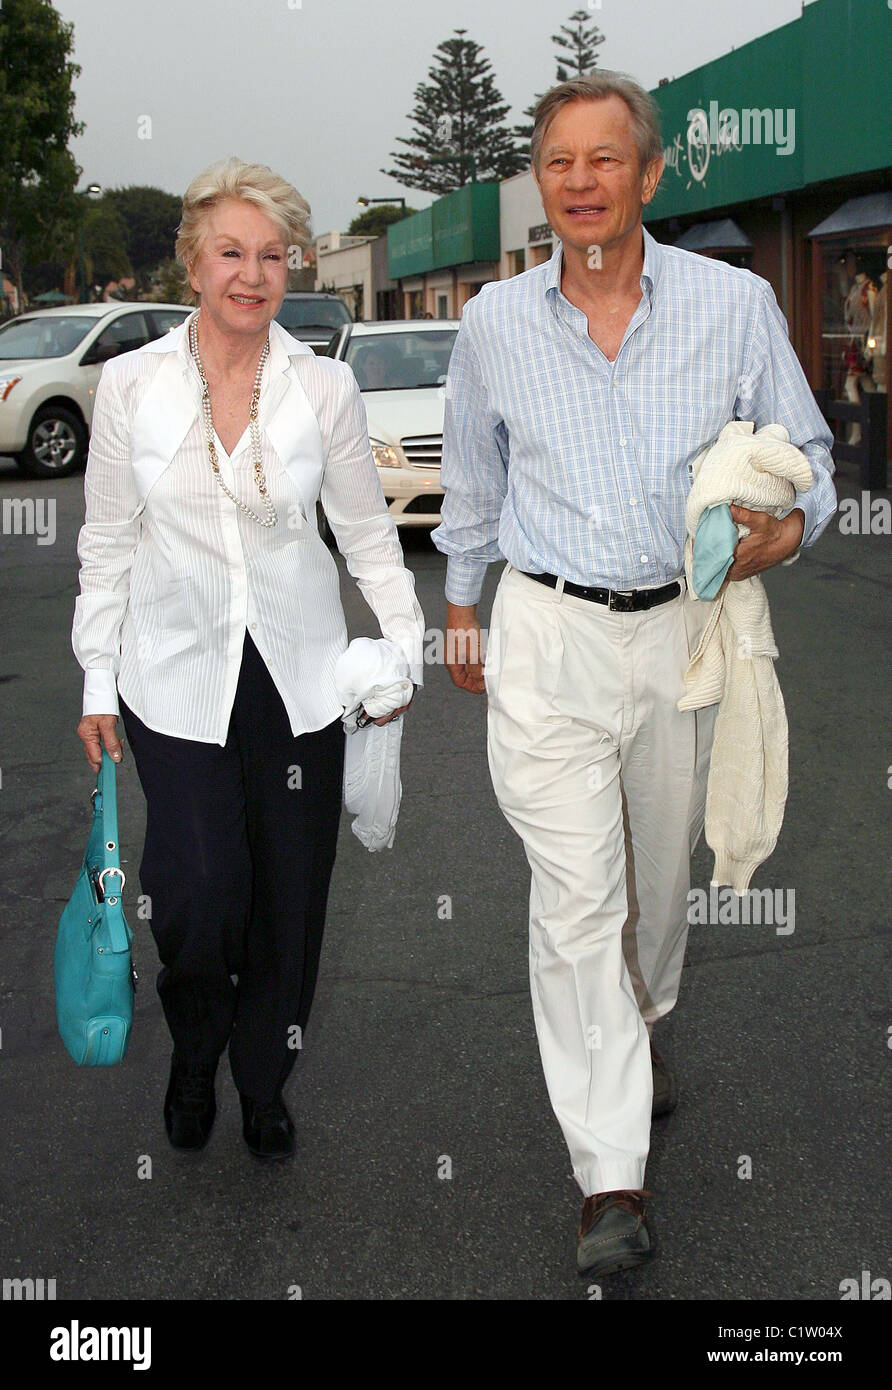 Michael York and wife Patricia McCallum heading to Nobu Restaurant in Malibu. Los Angeles, California - 13.08.09 Stock Photo